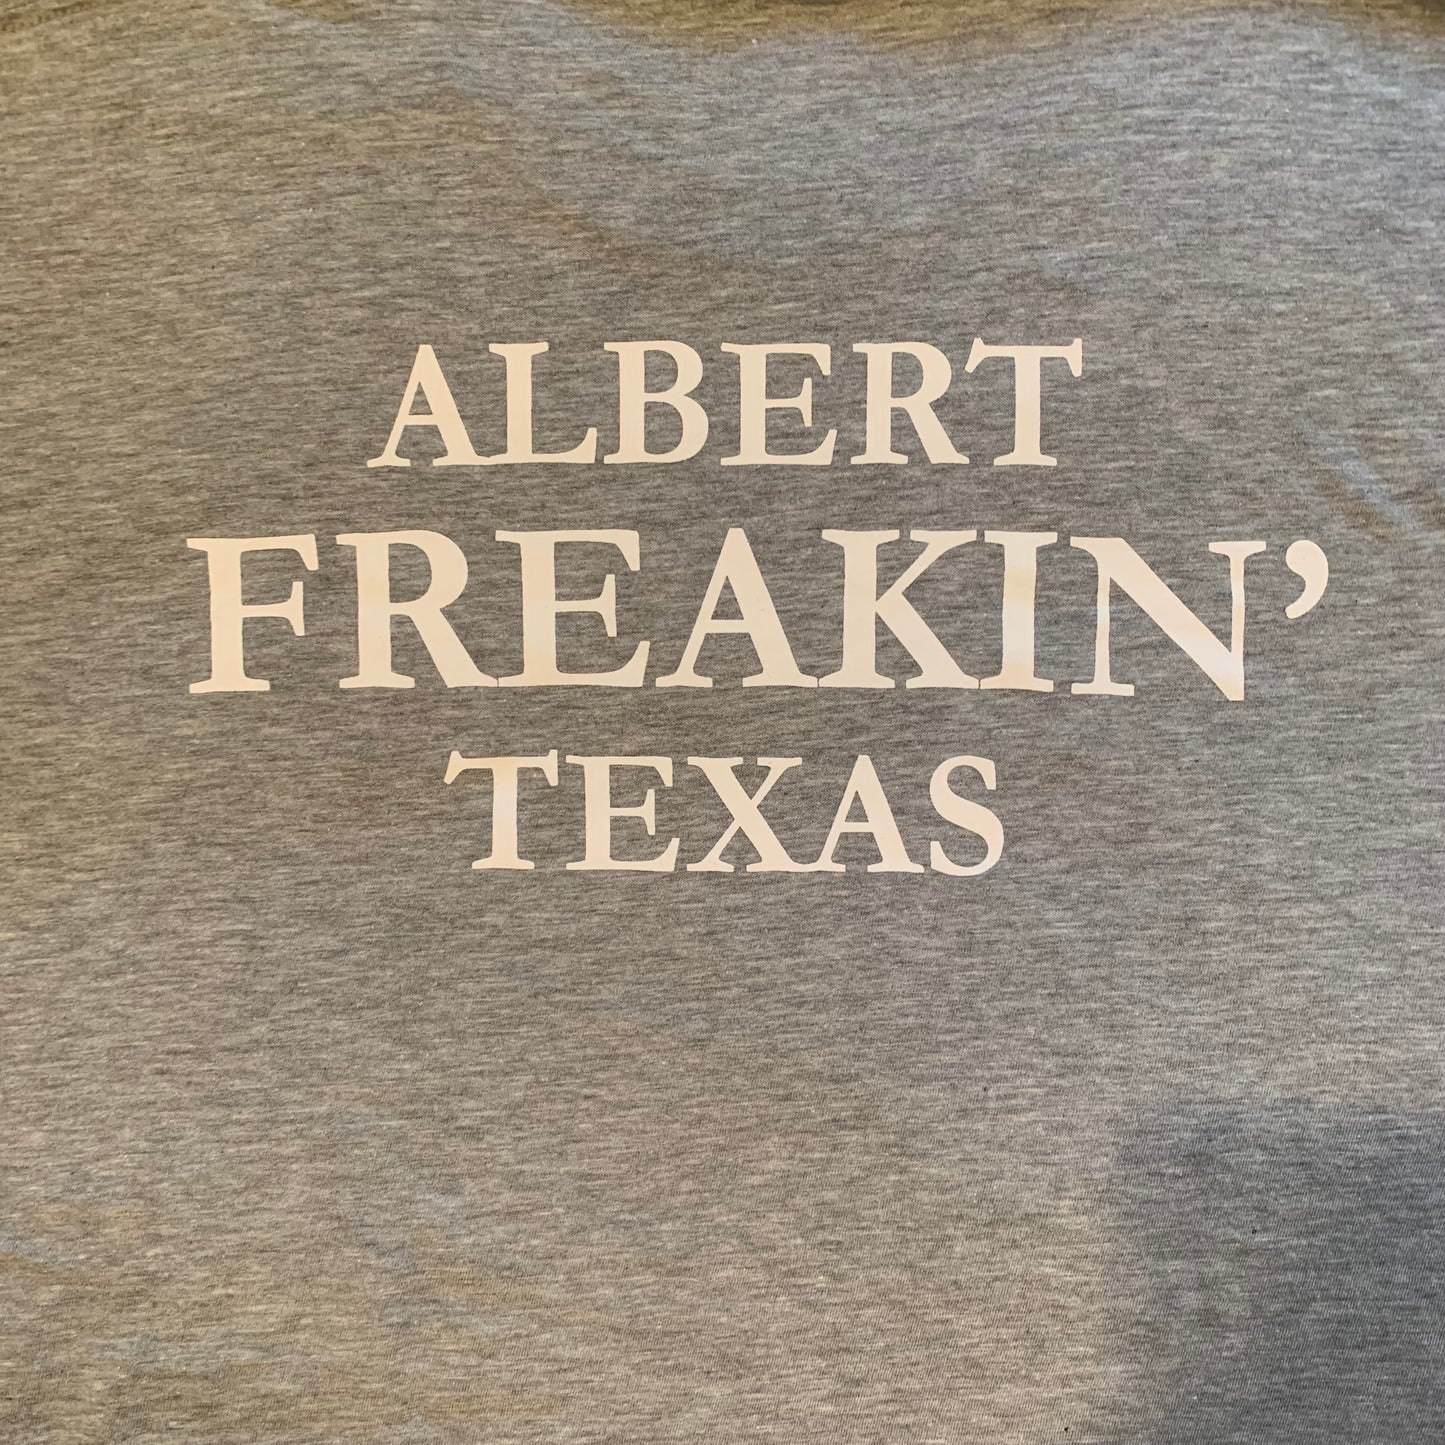 ALBERT FREAKIN'TEXAS